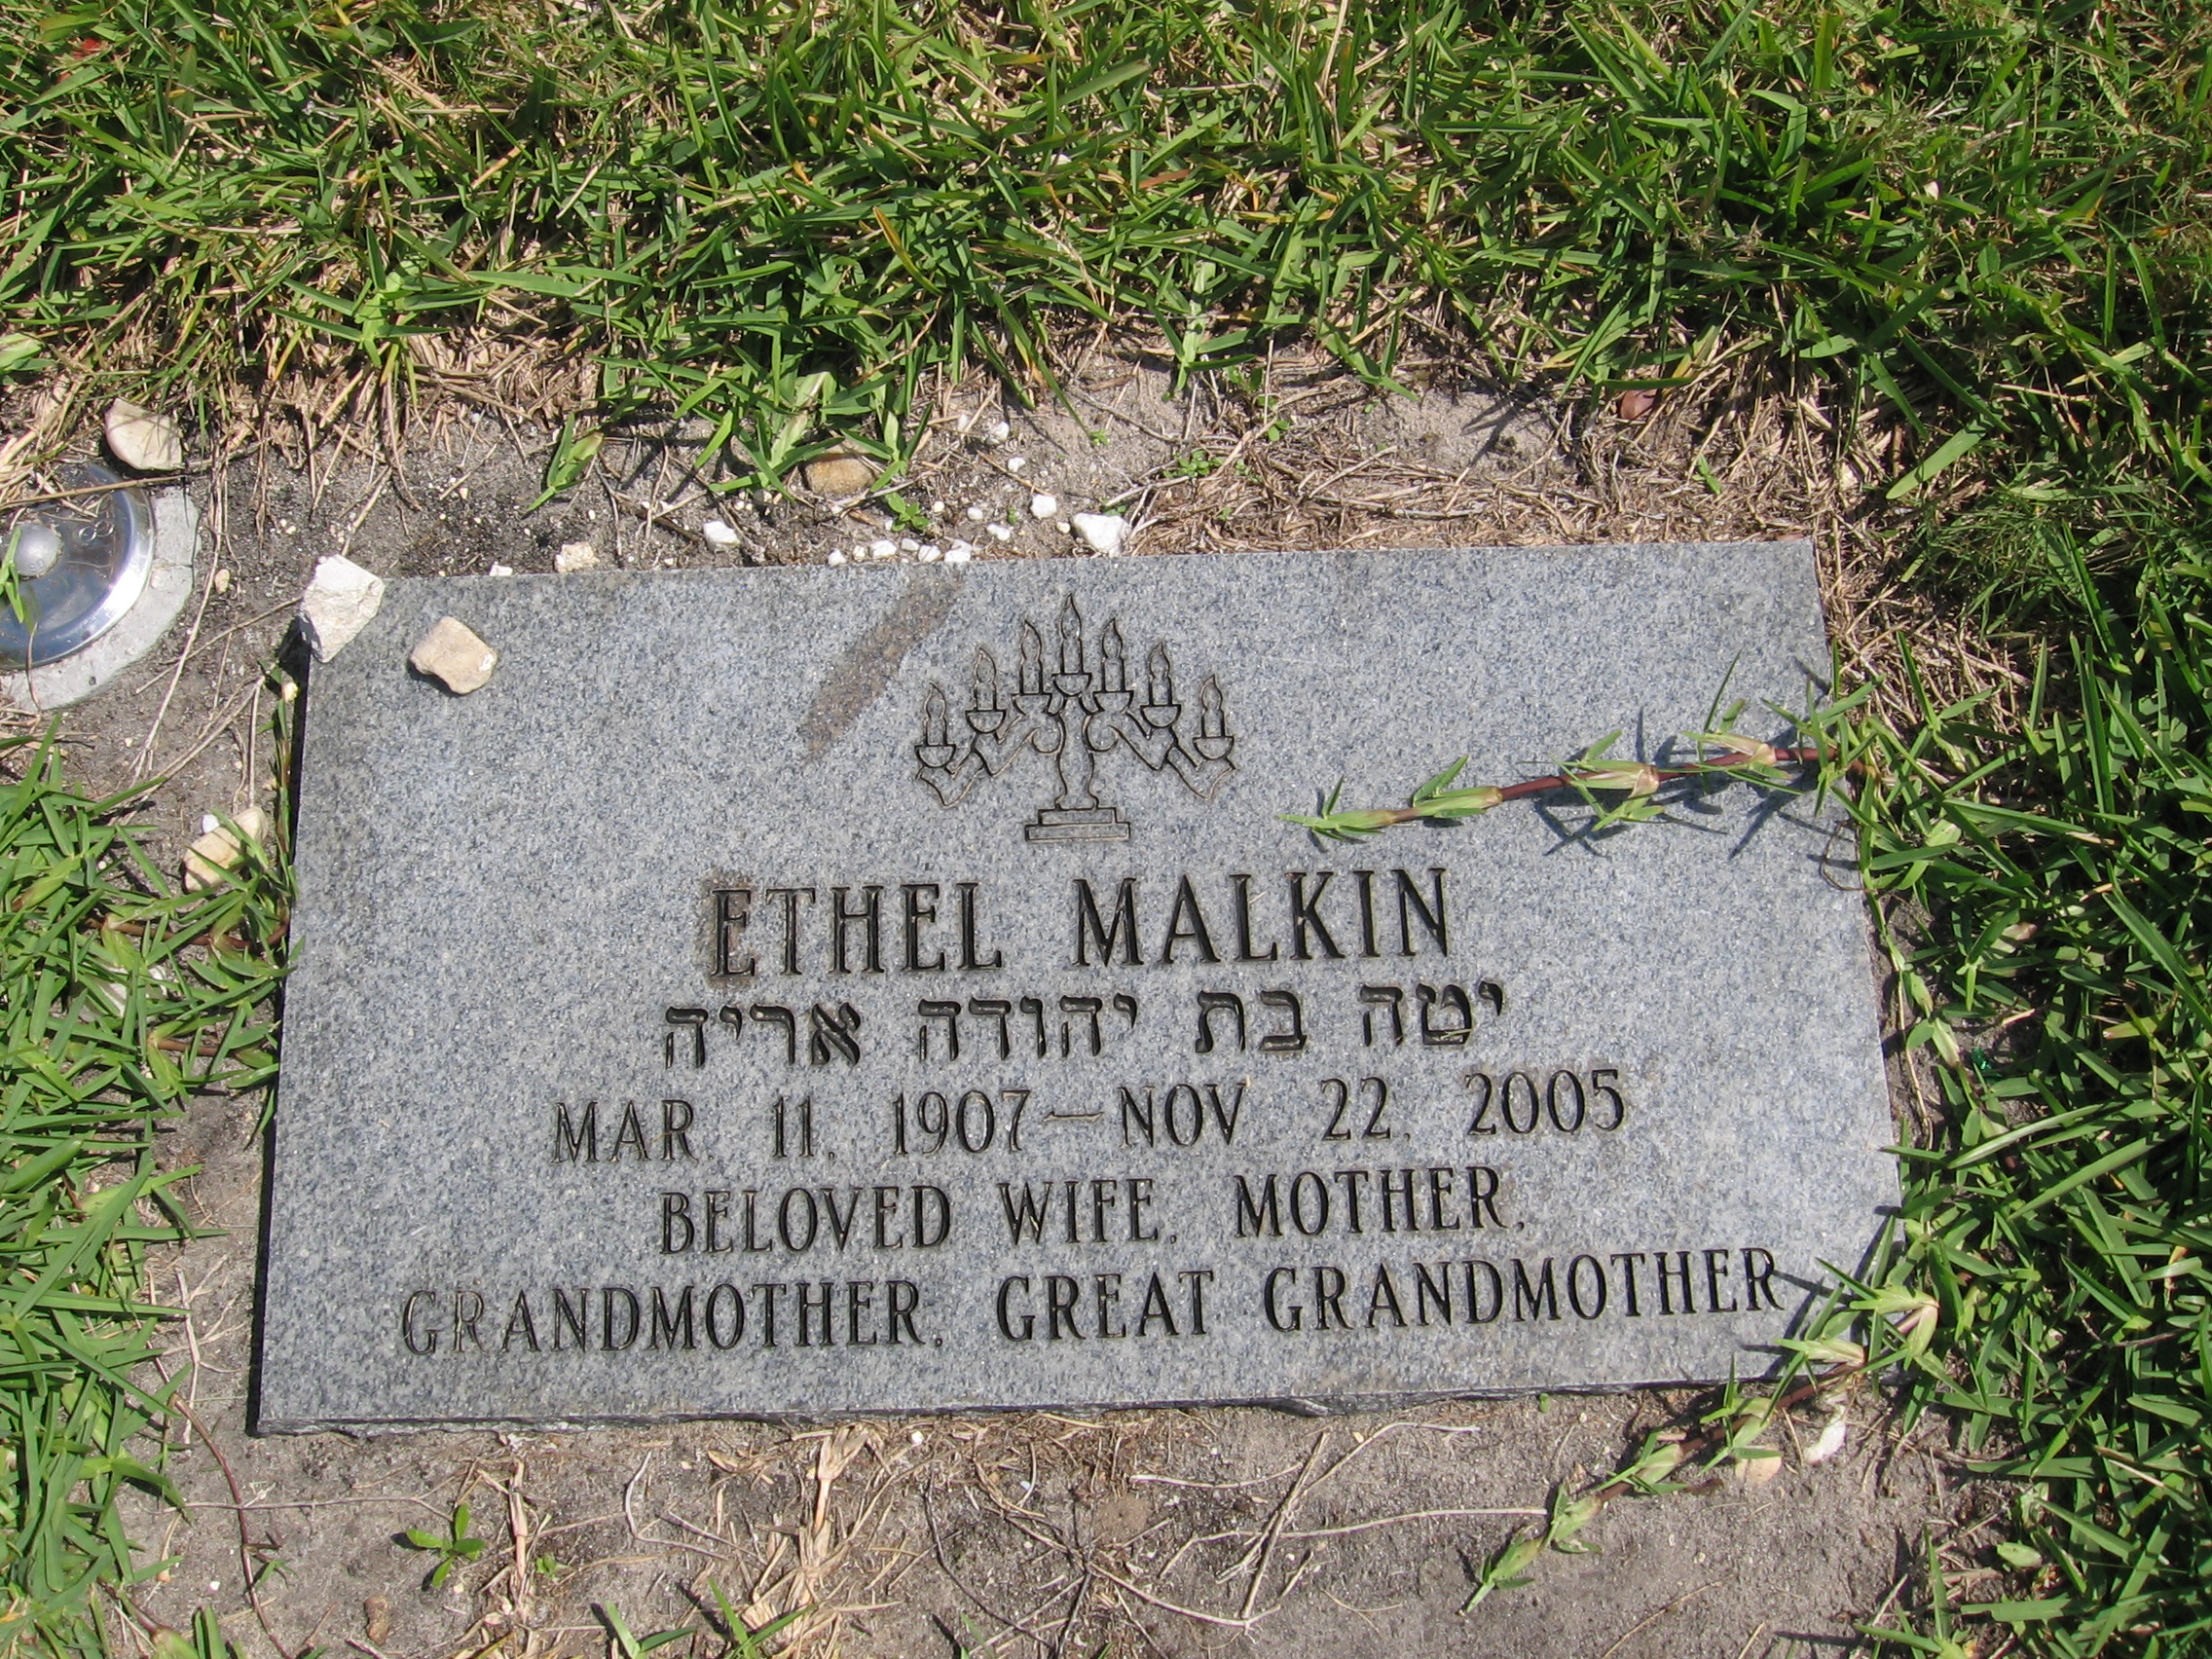 Ethel Malkin